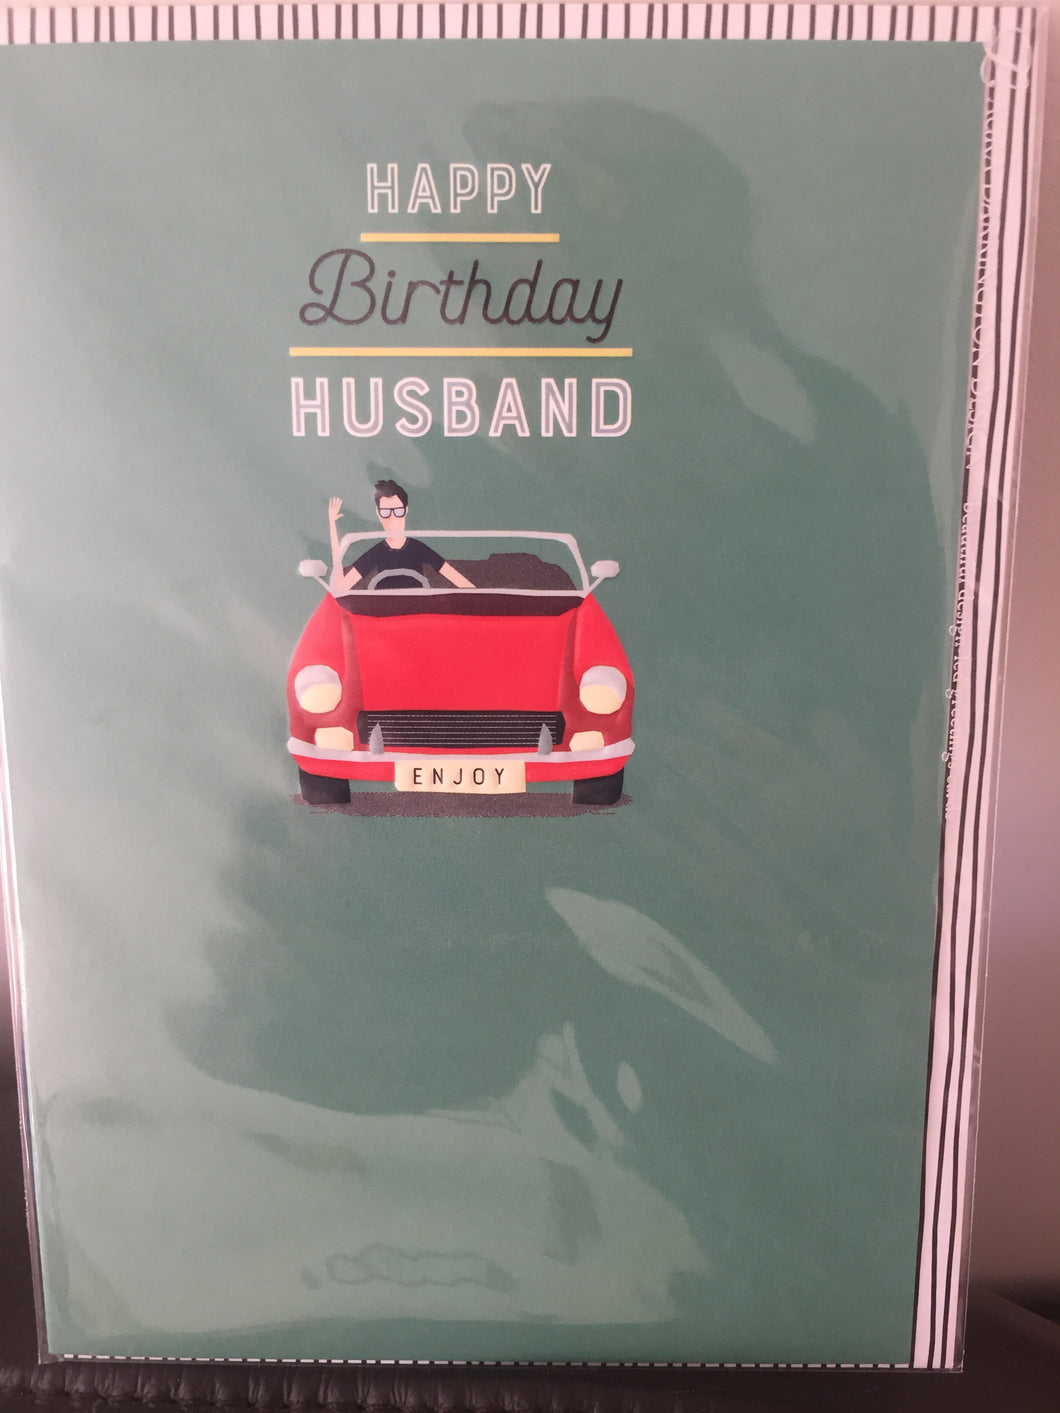 Happy Birthday Husband - The Alresford Gift Shop